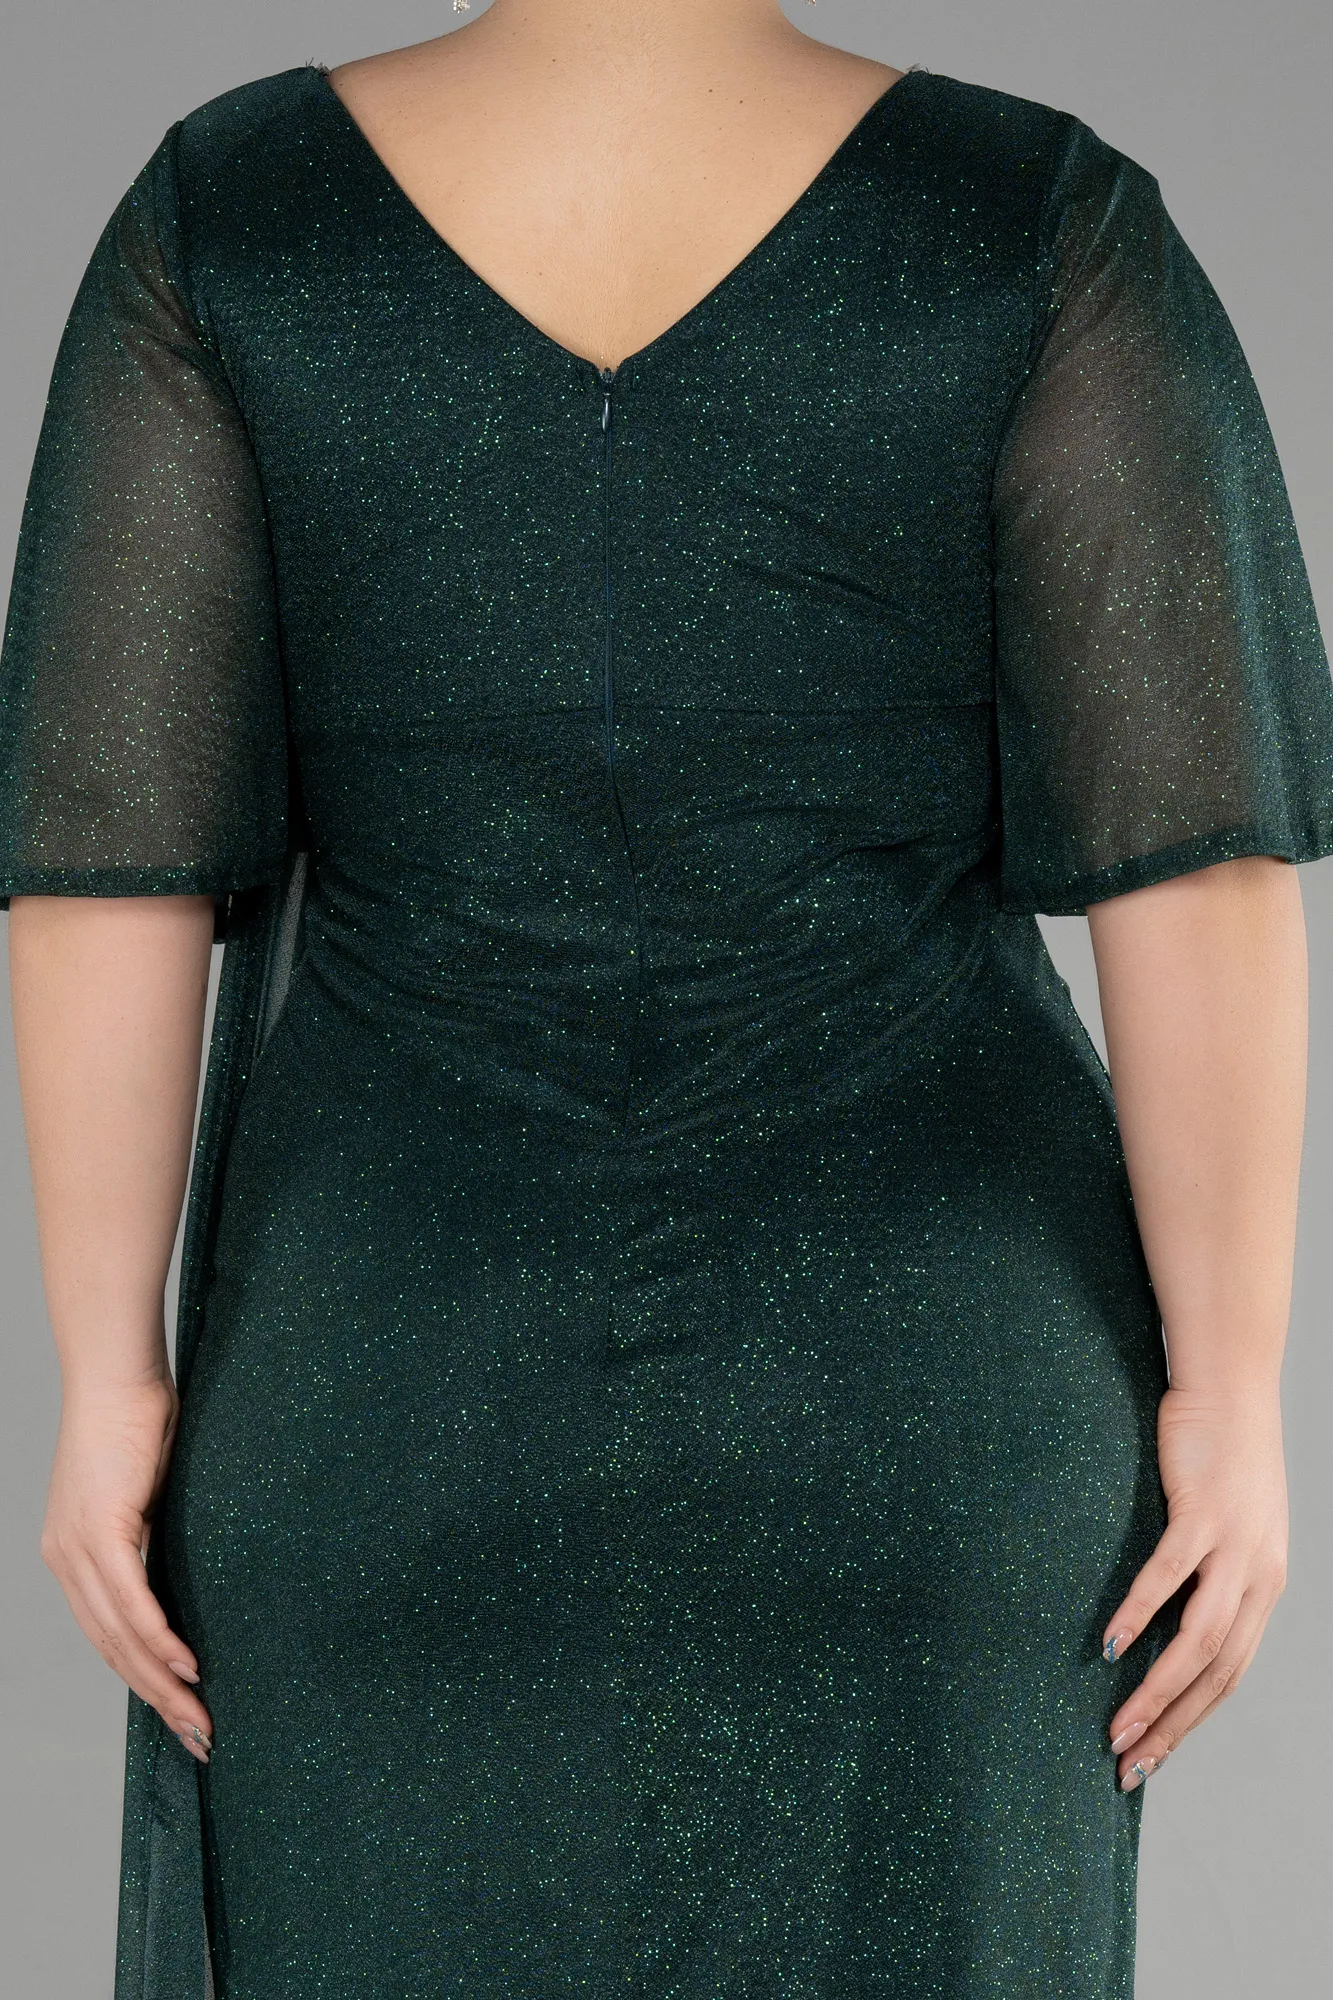 Emerald Green-Long Plus Size Evening Gown ABU3646